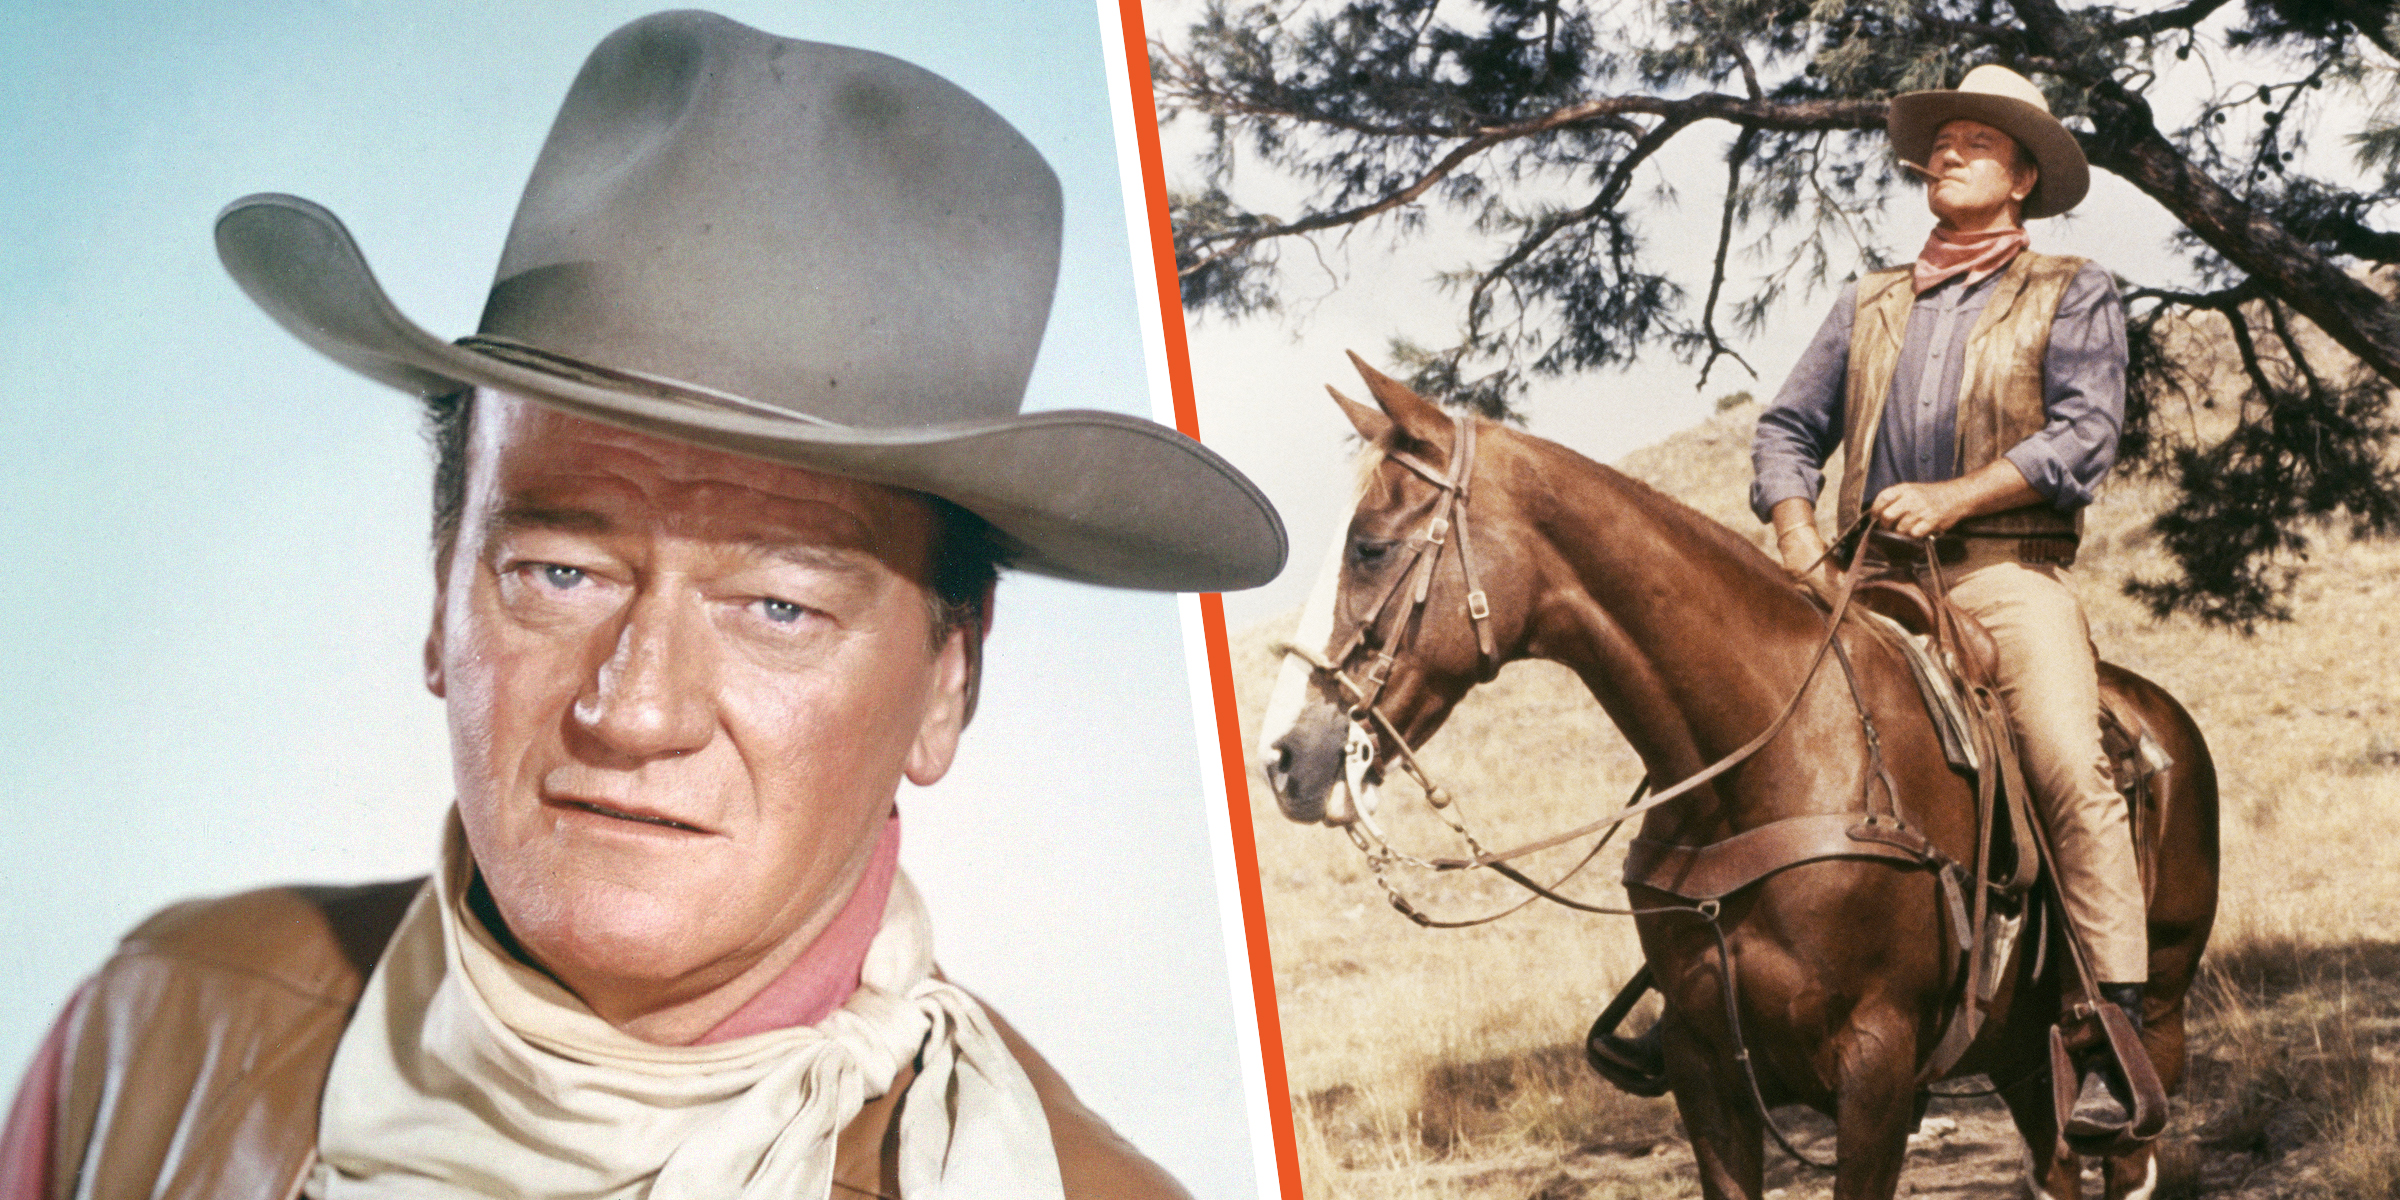 John Wayne, 1977 | John Wayne, 1970 | Source: Getty Images